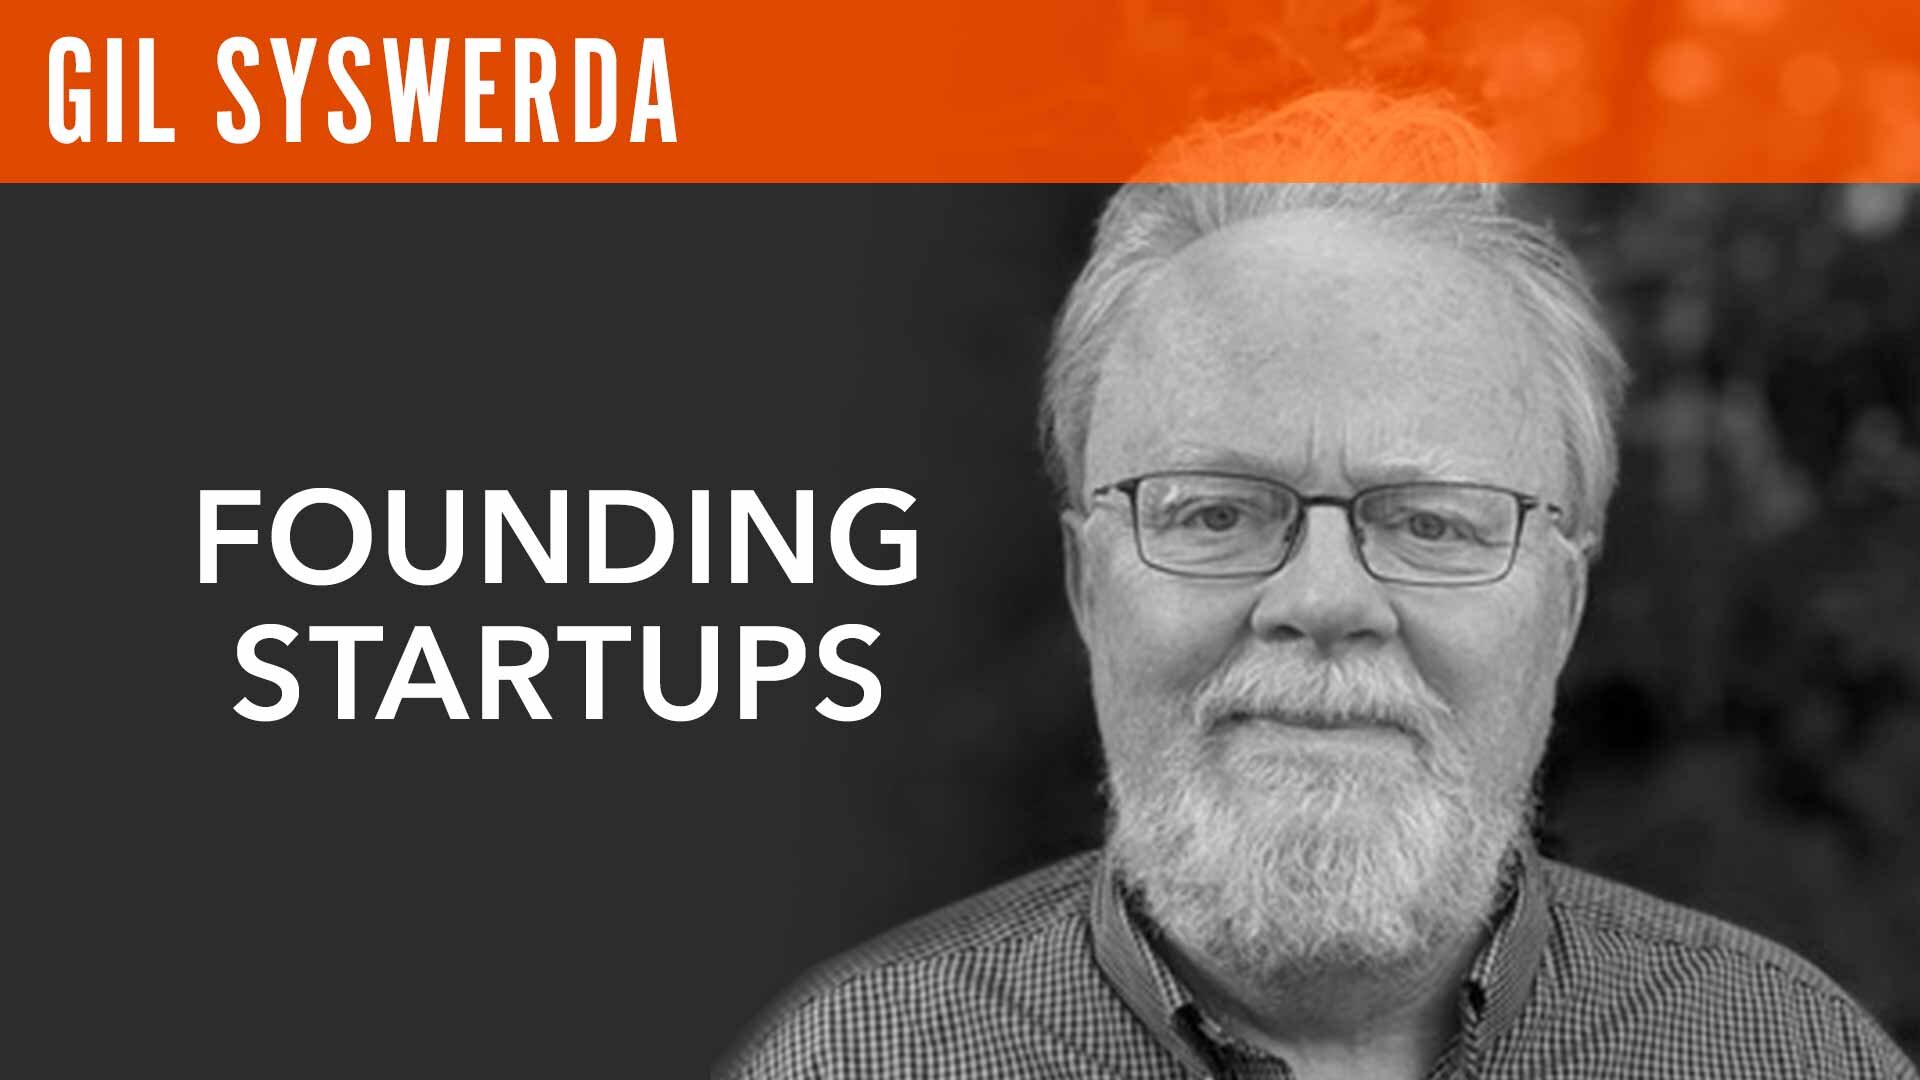 Gil Syswerda, "Founding Startups"